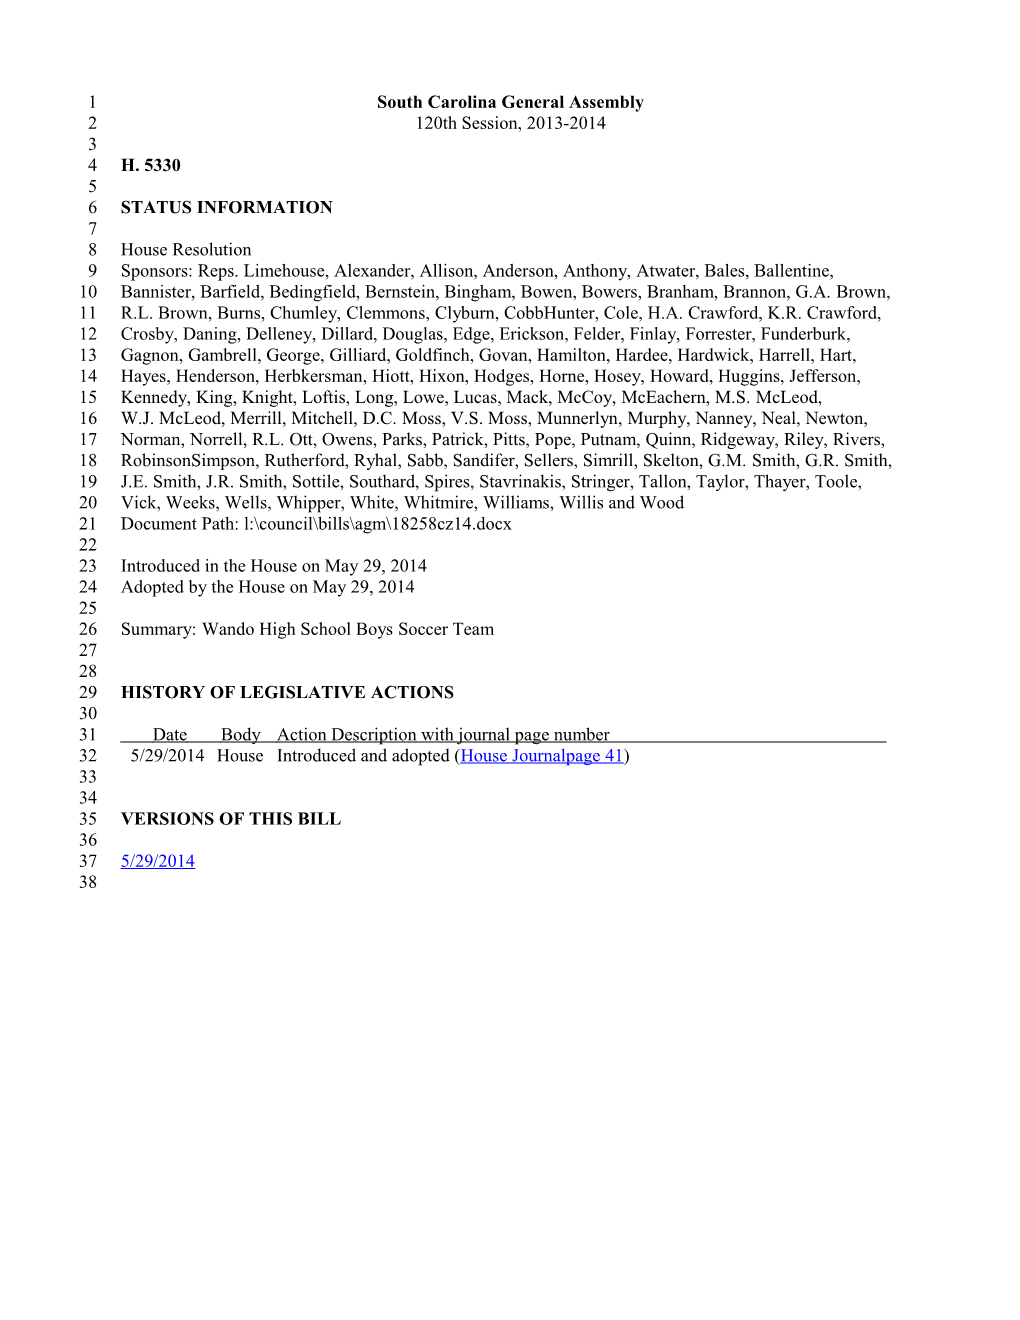 2013-2014 Bill 5330: Wando High School Boys Soccer Team - South Carolina Legislature Online